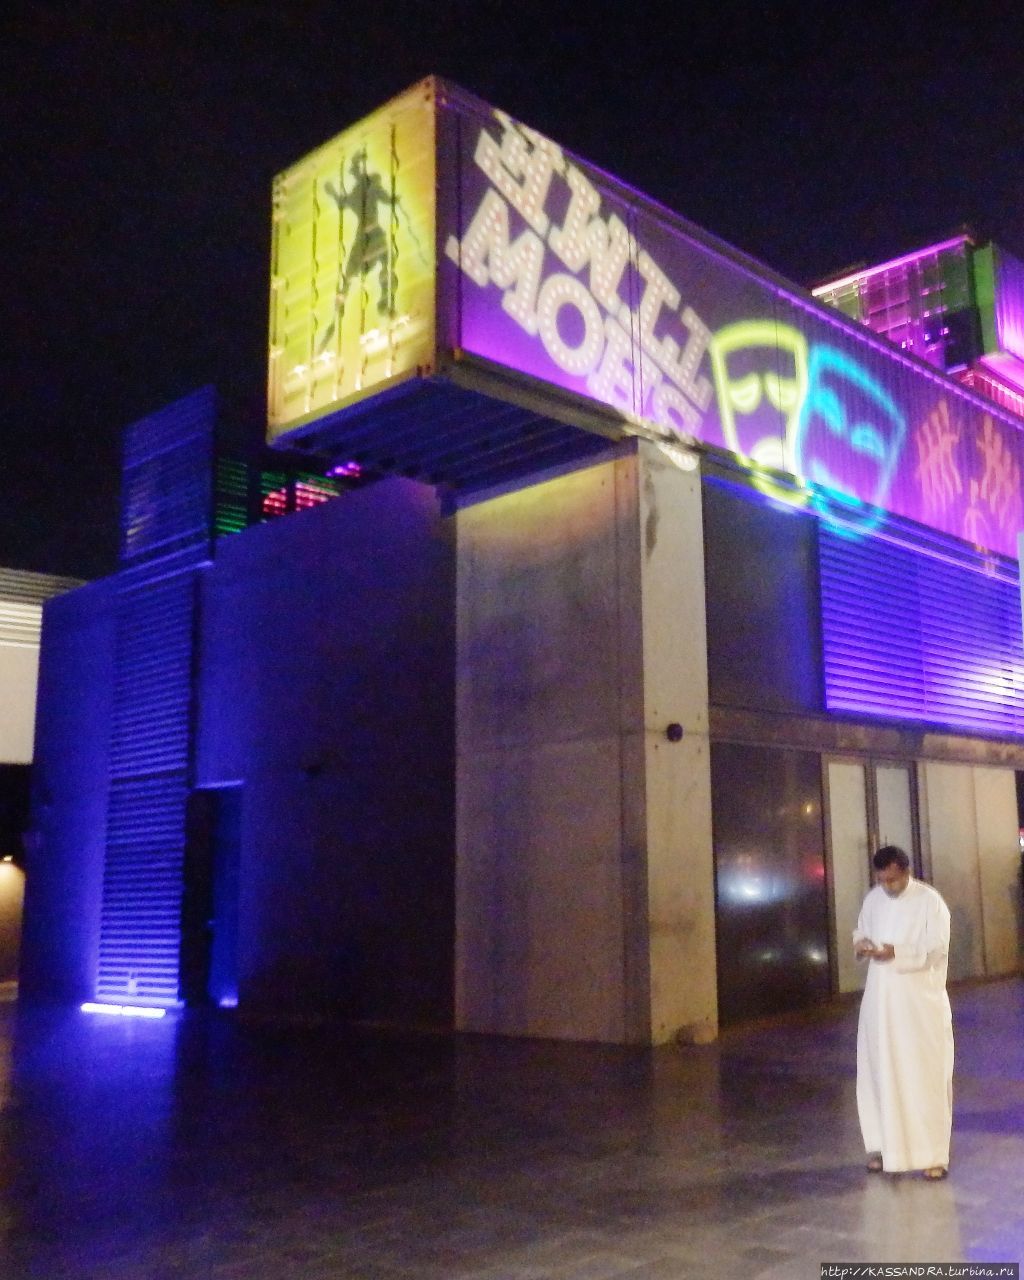 Карготектура. BOXPARK в Дубае Дубай, ОАЭ